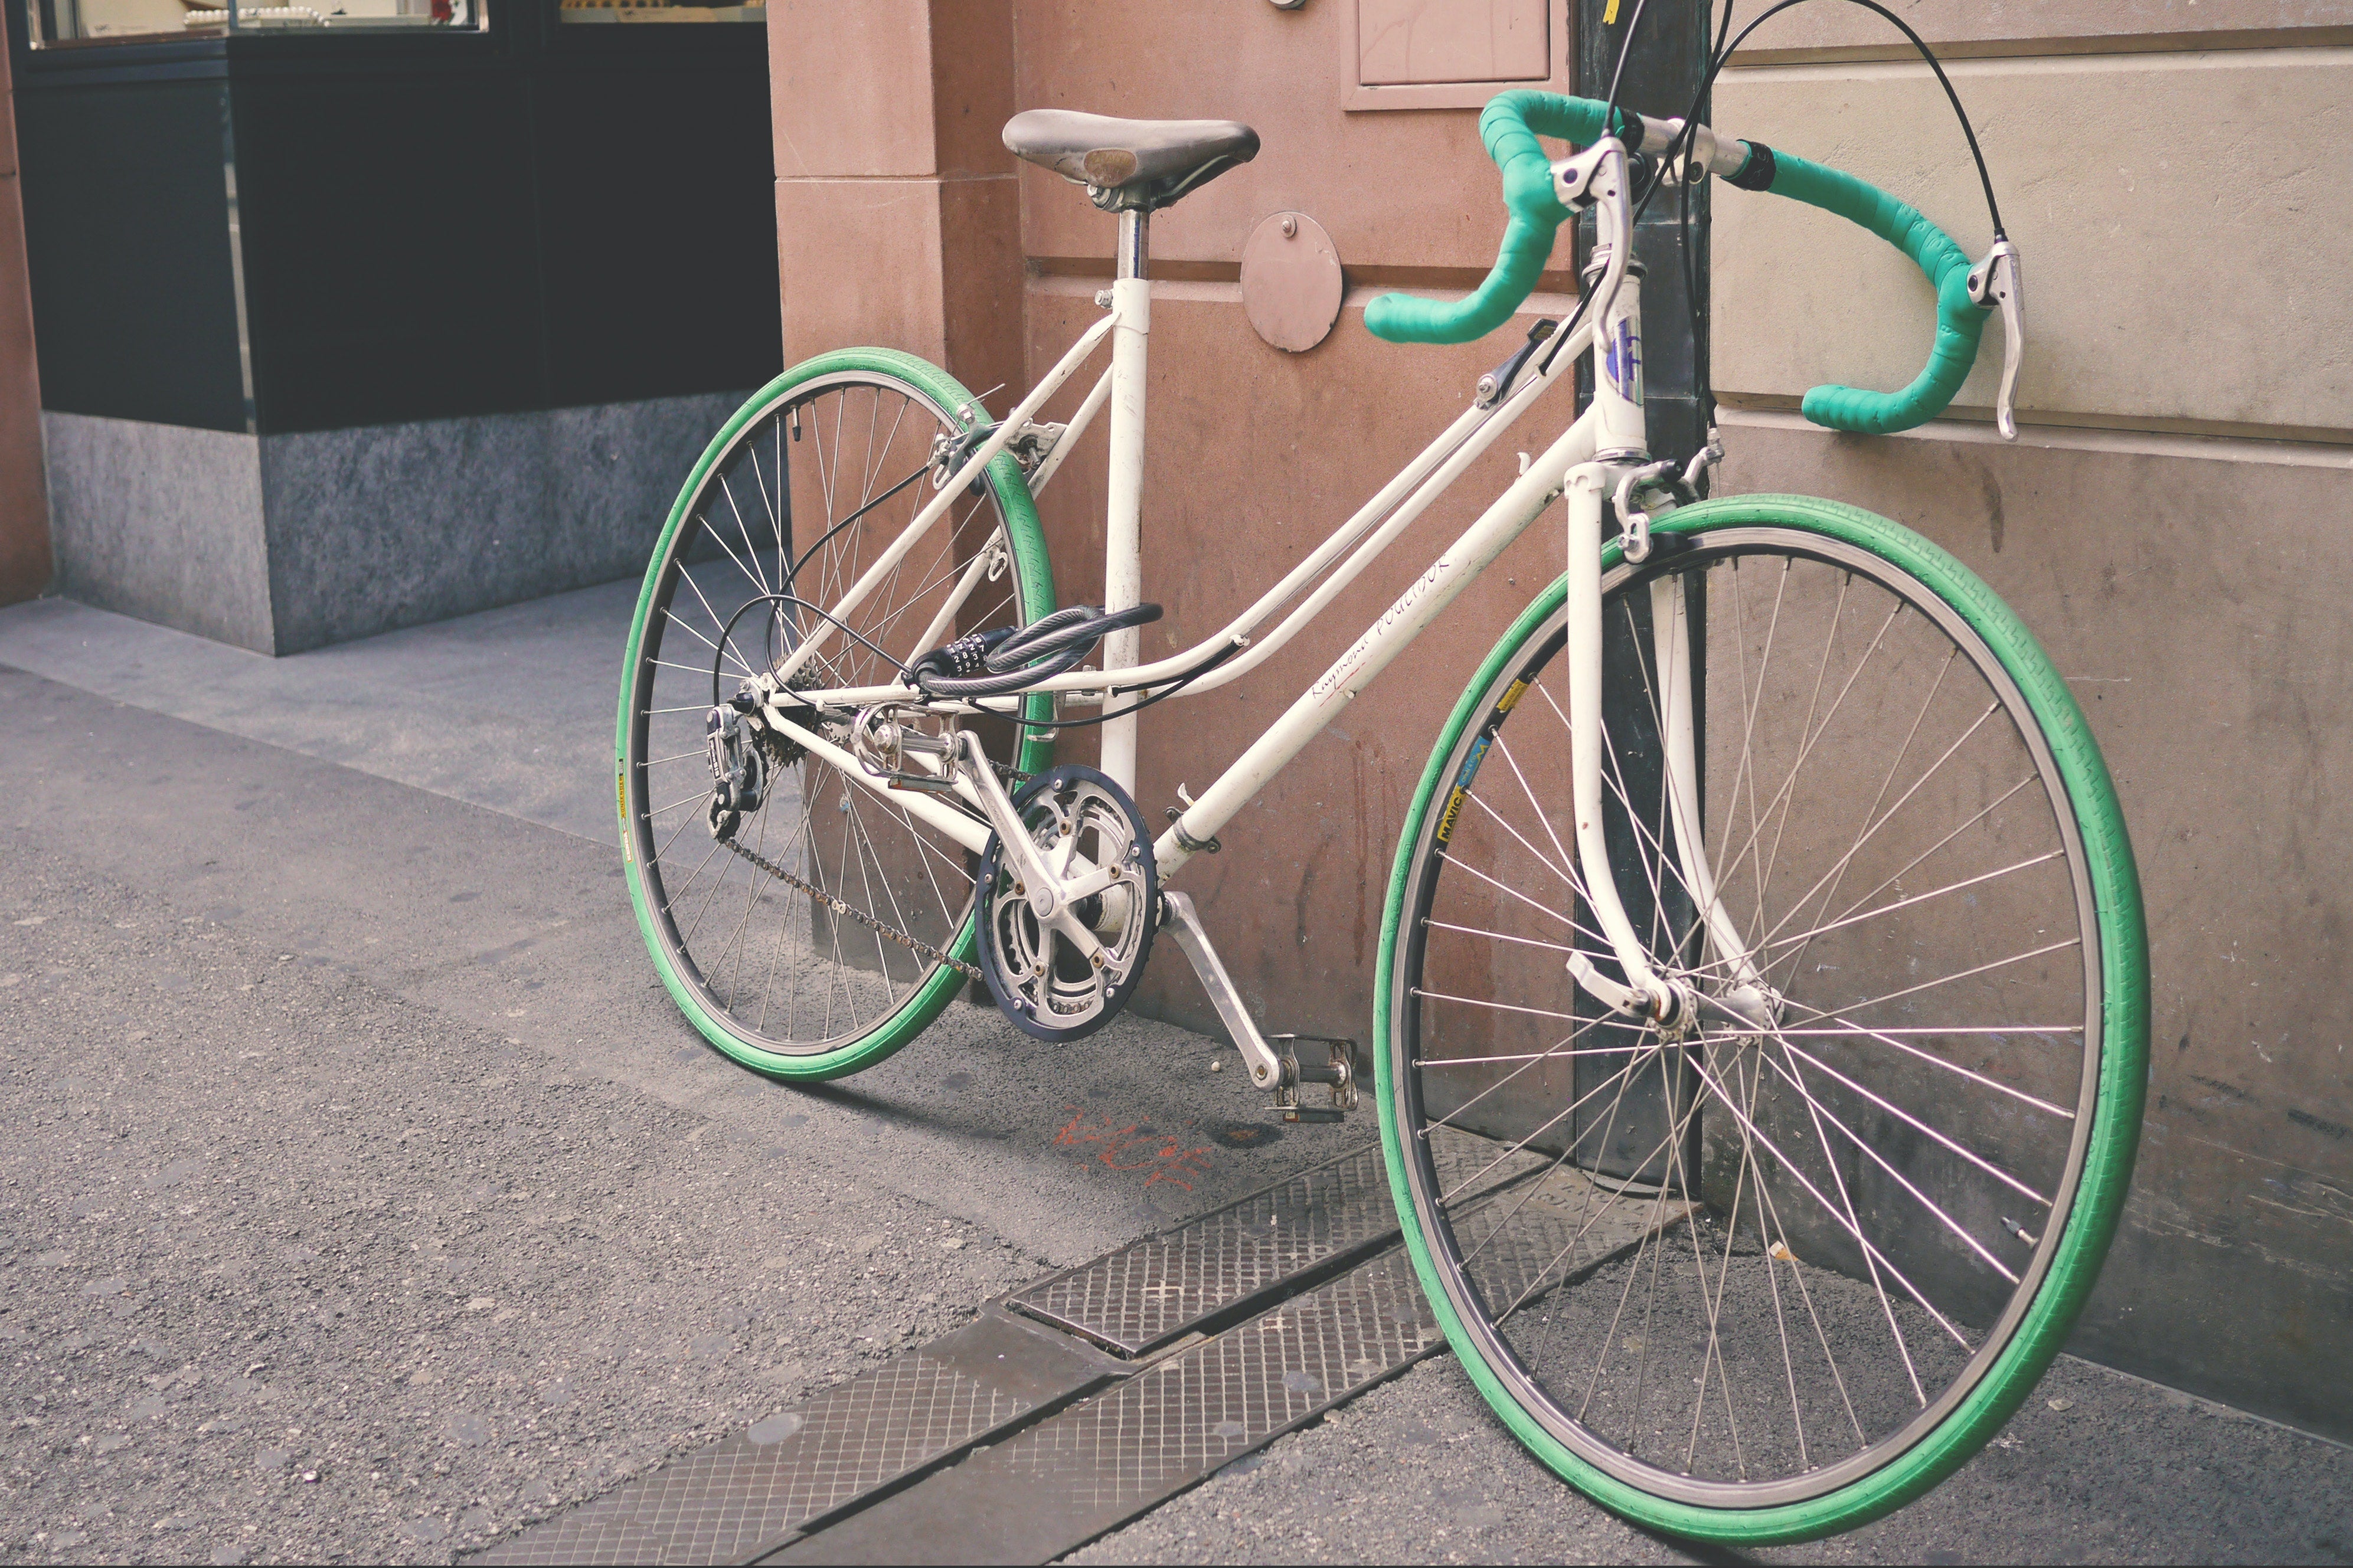 https://www.pc.pitt.edu/sites/default/files/white-and-green-bike-leaning-on-wall-191042.jpg